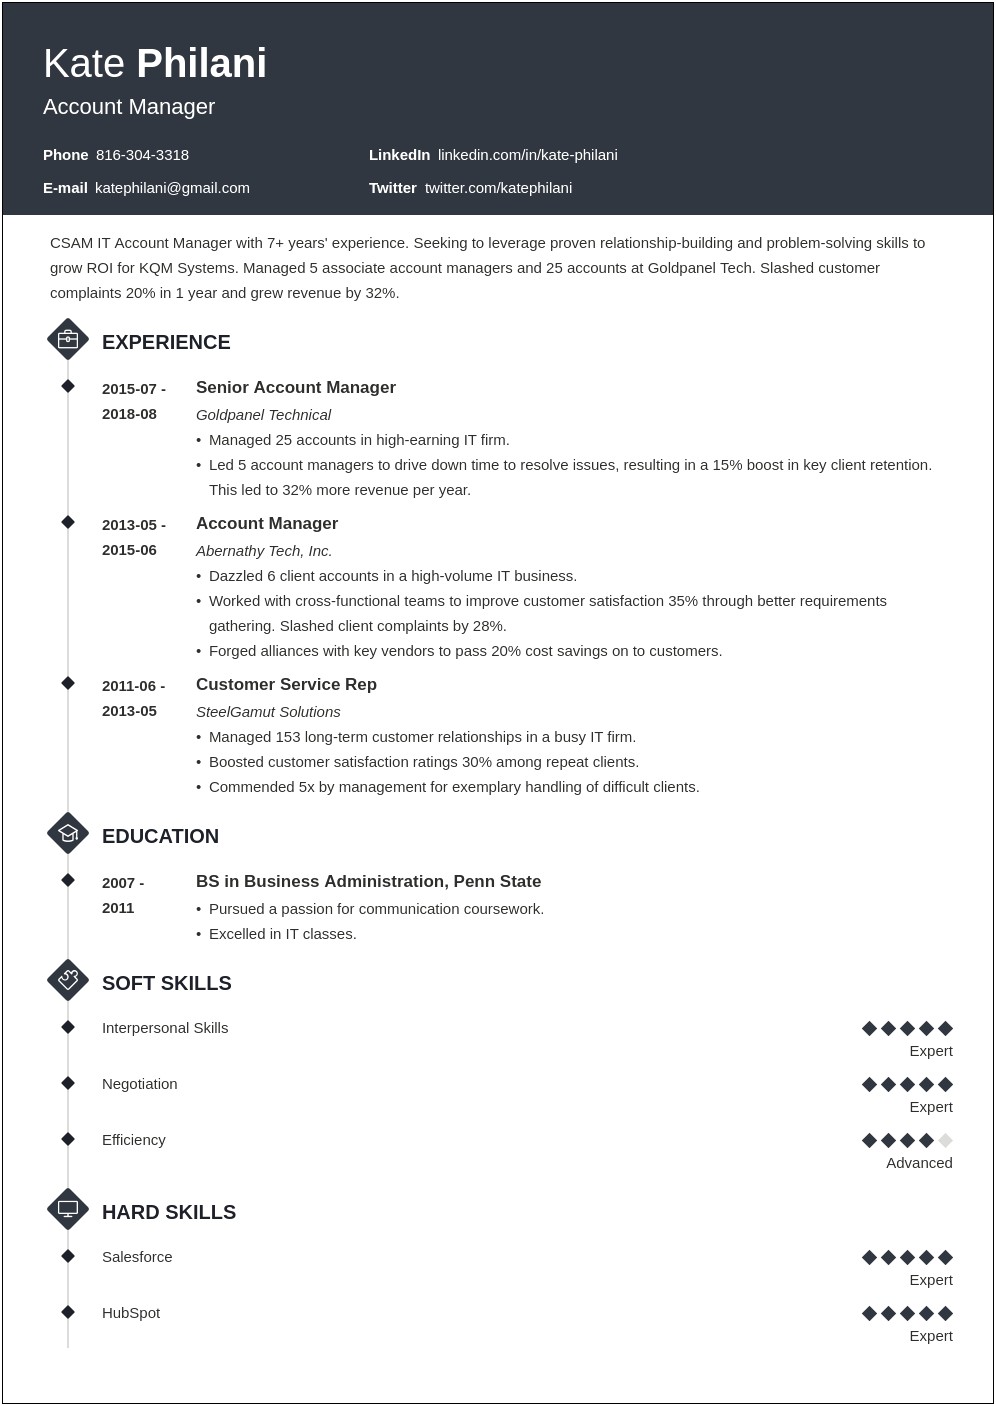 Online Sales Account Manager Job Description For Resume